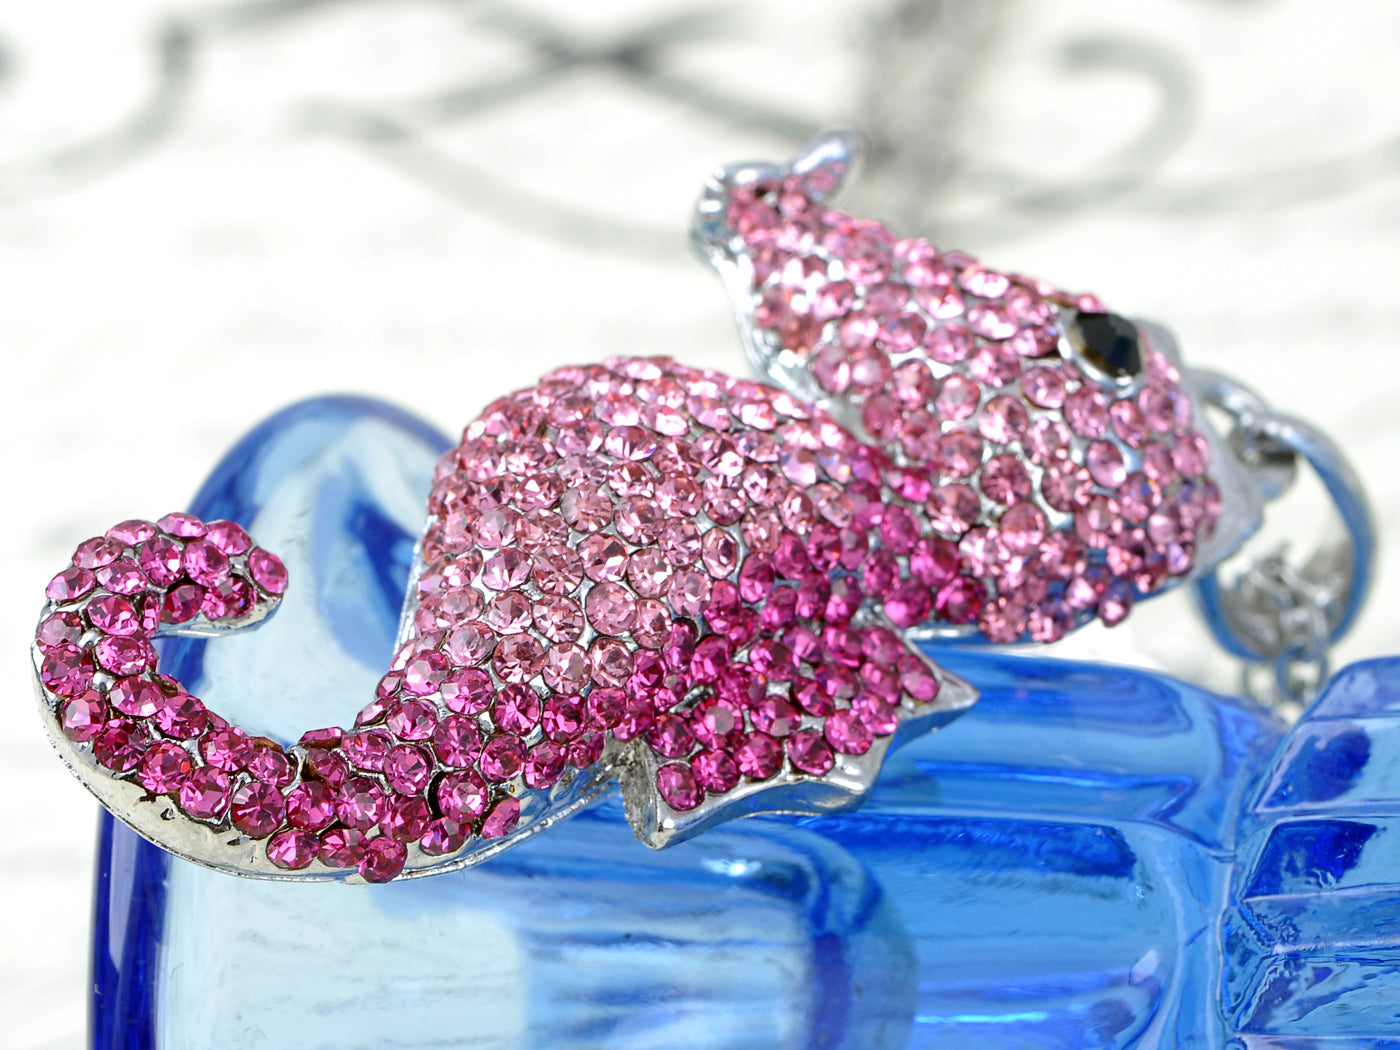 Hot Pink Coloured Adorable Puckering Seahorse Ocean Creature Pendant Necklace